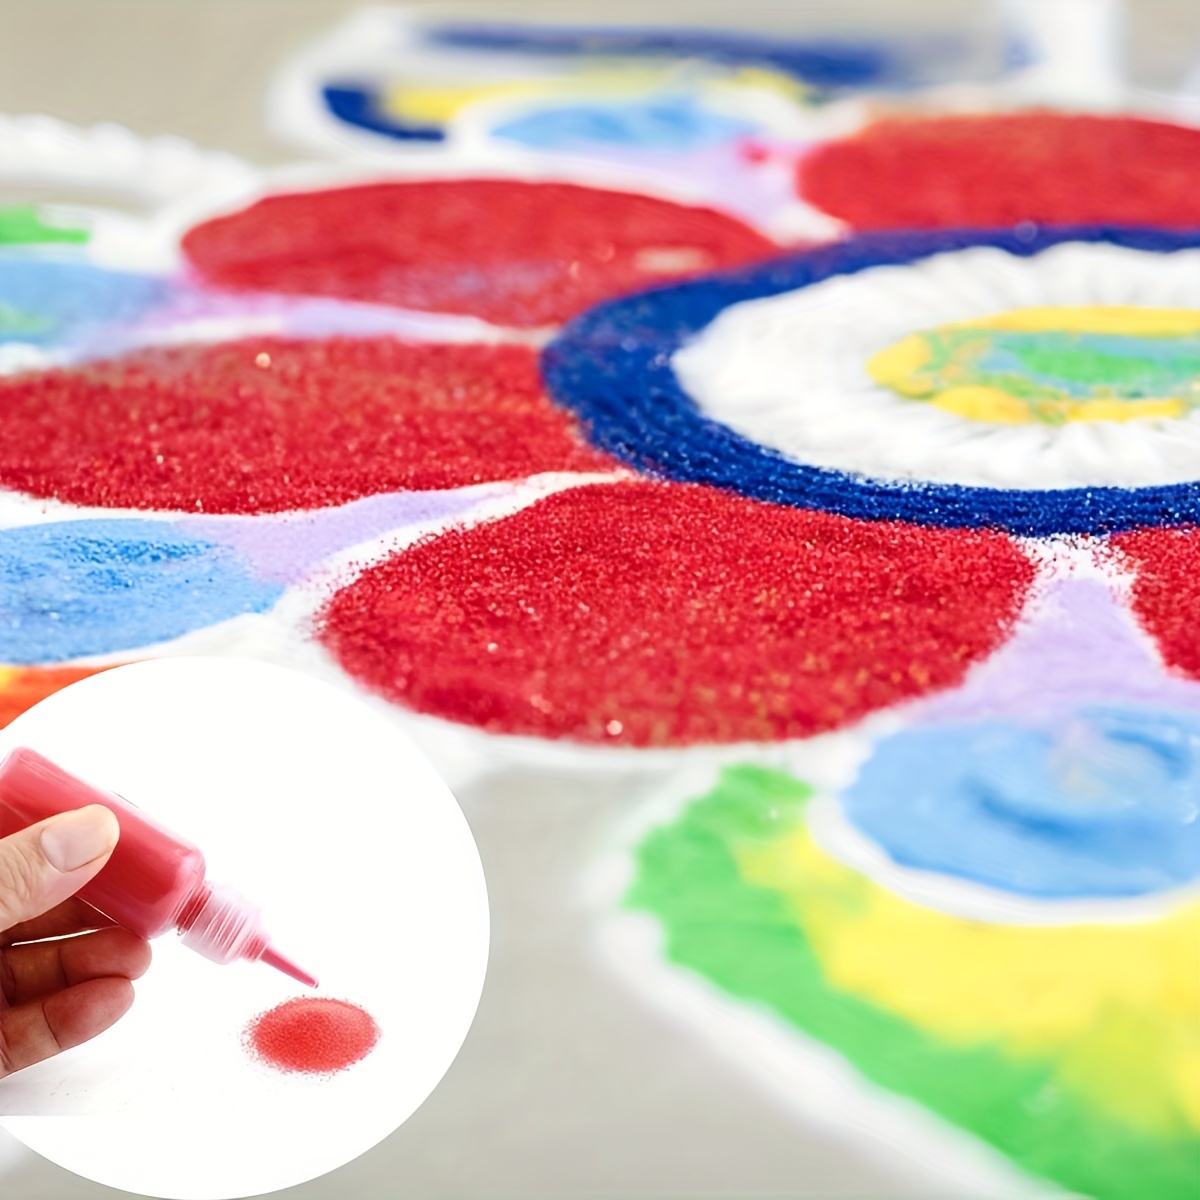 Kit de pintura de pedras para crianças - Artes e ofícios de pintura  criativa para crianças,Suprimentos artísticos educativos para pintar  pedras